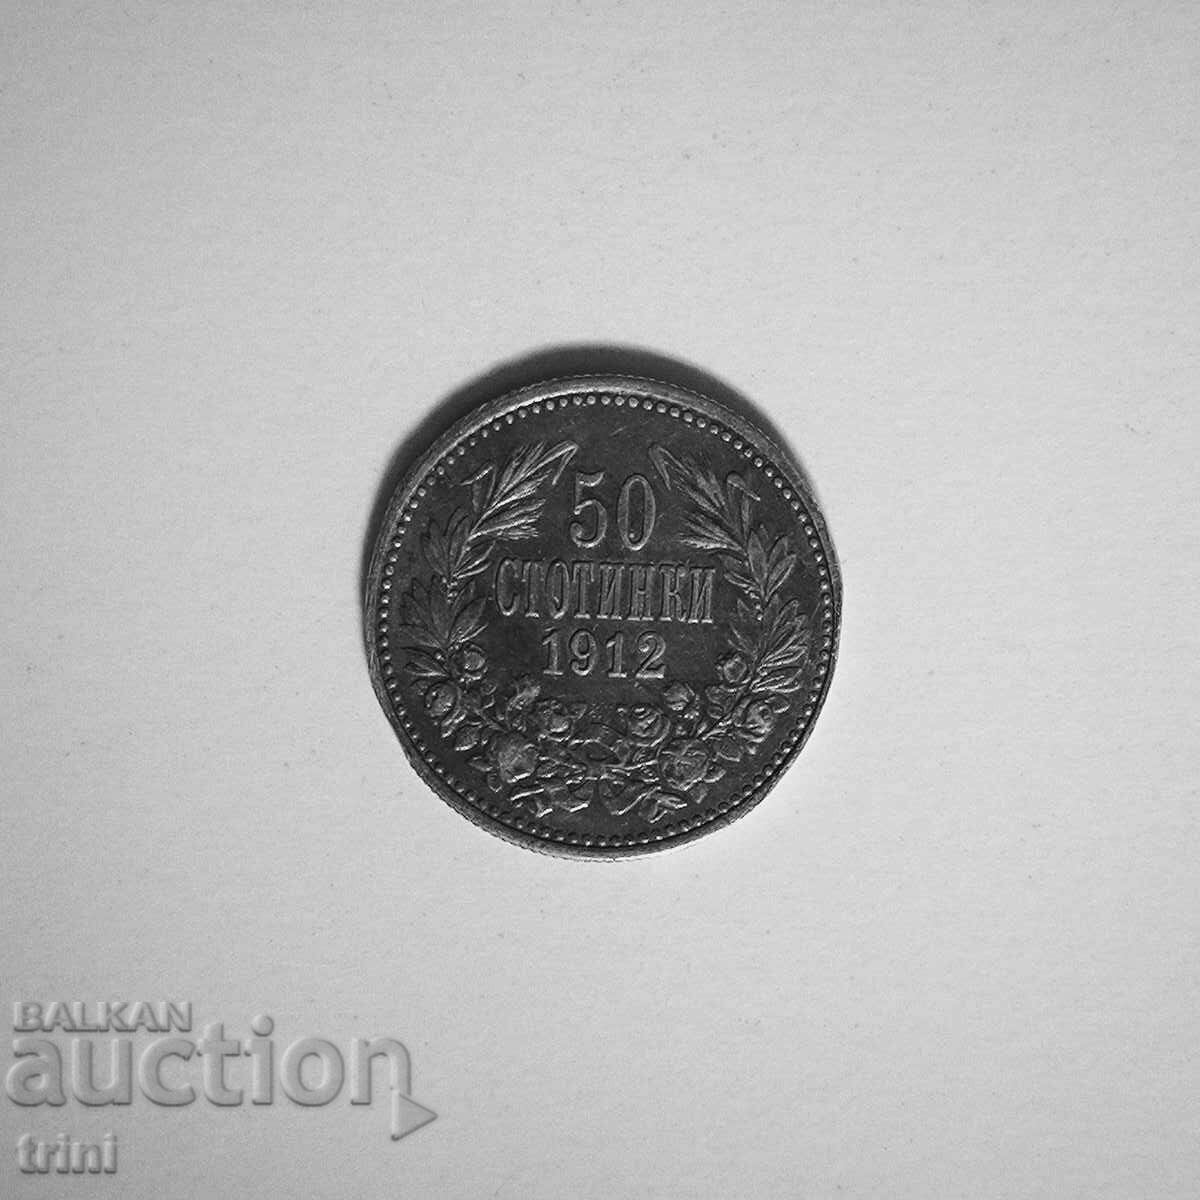 50 cents 1912 year b71